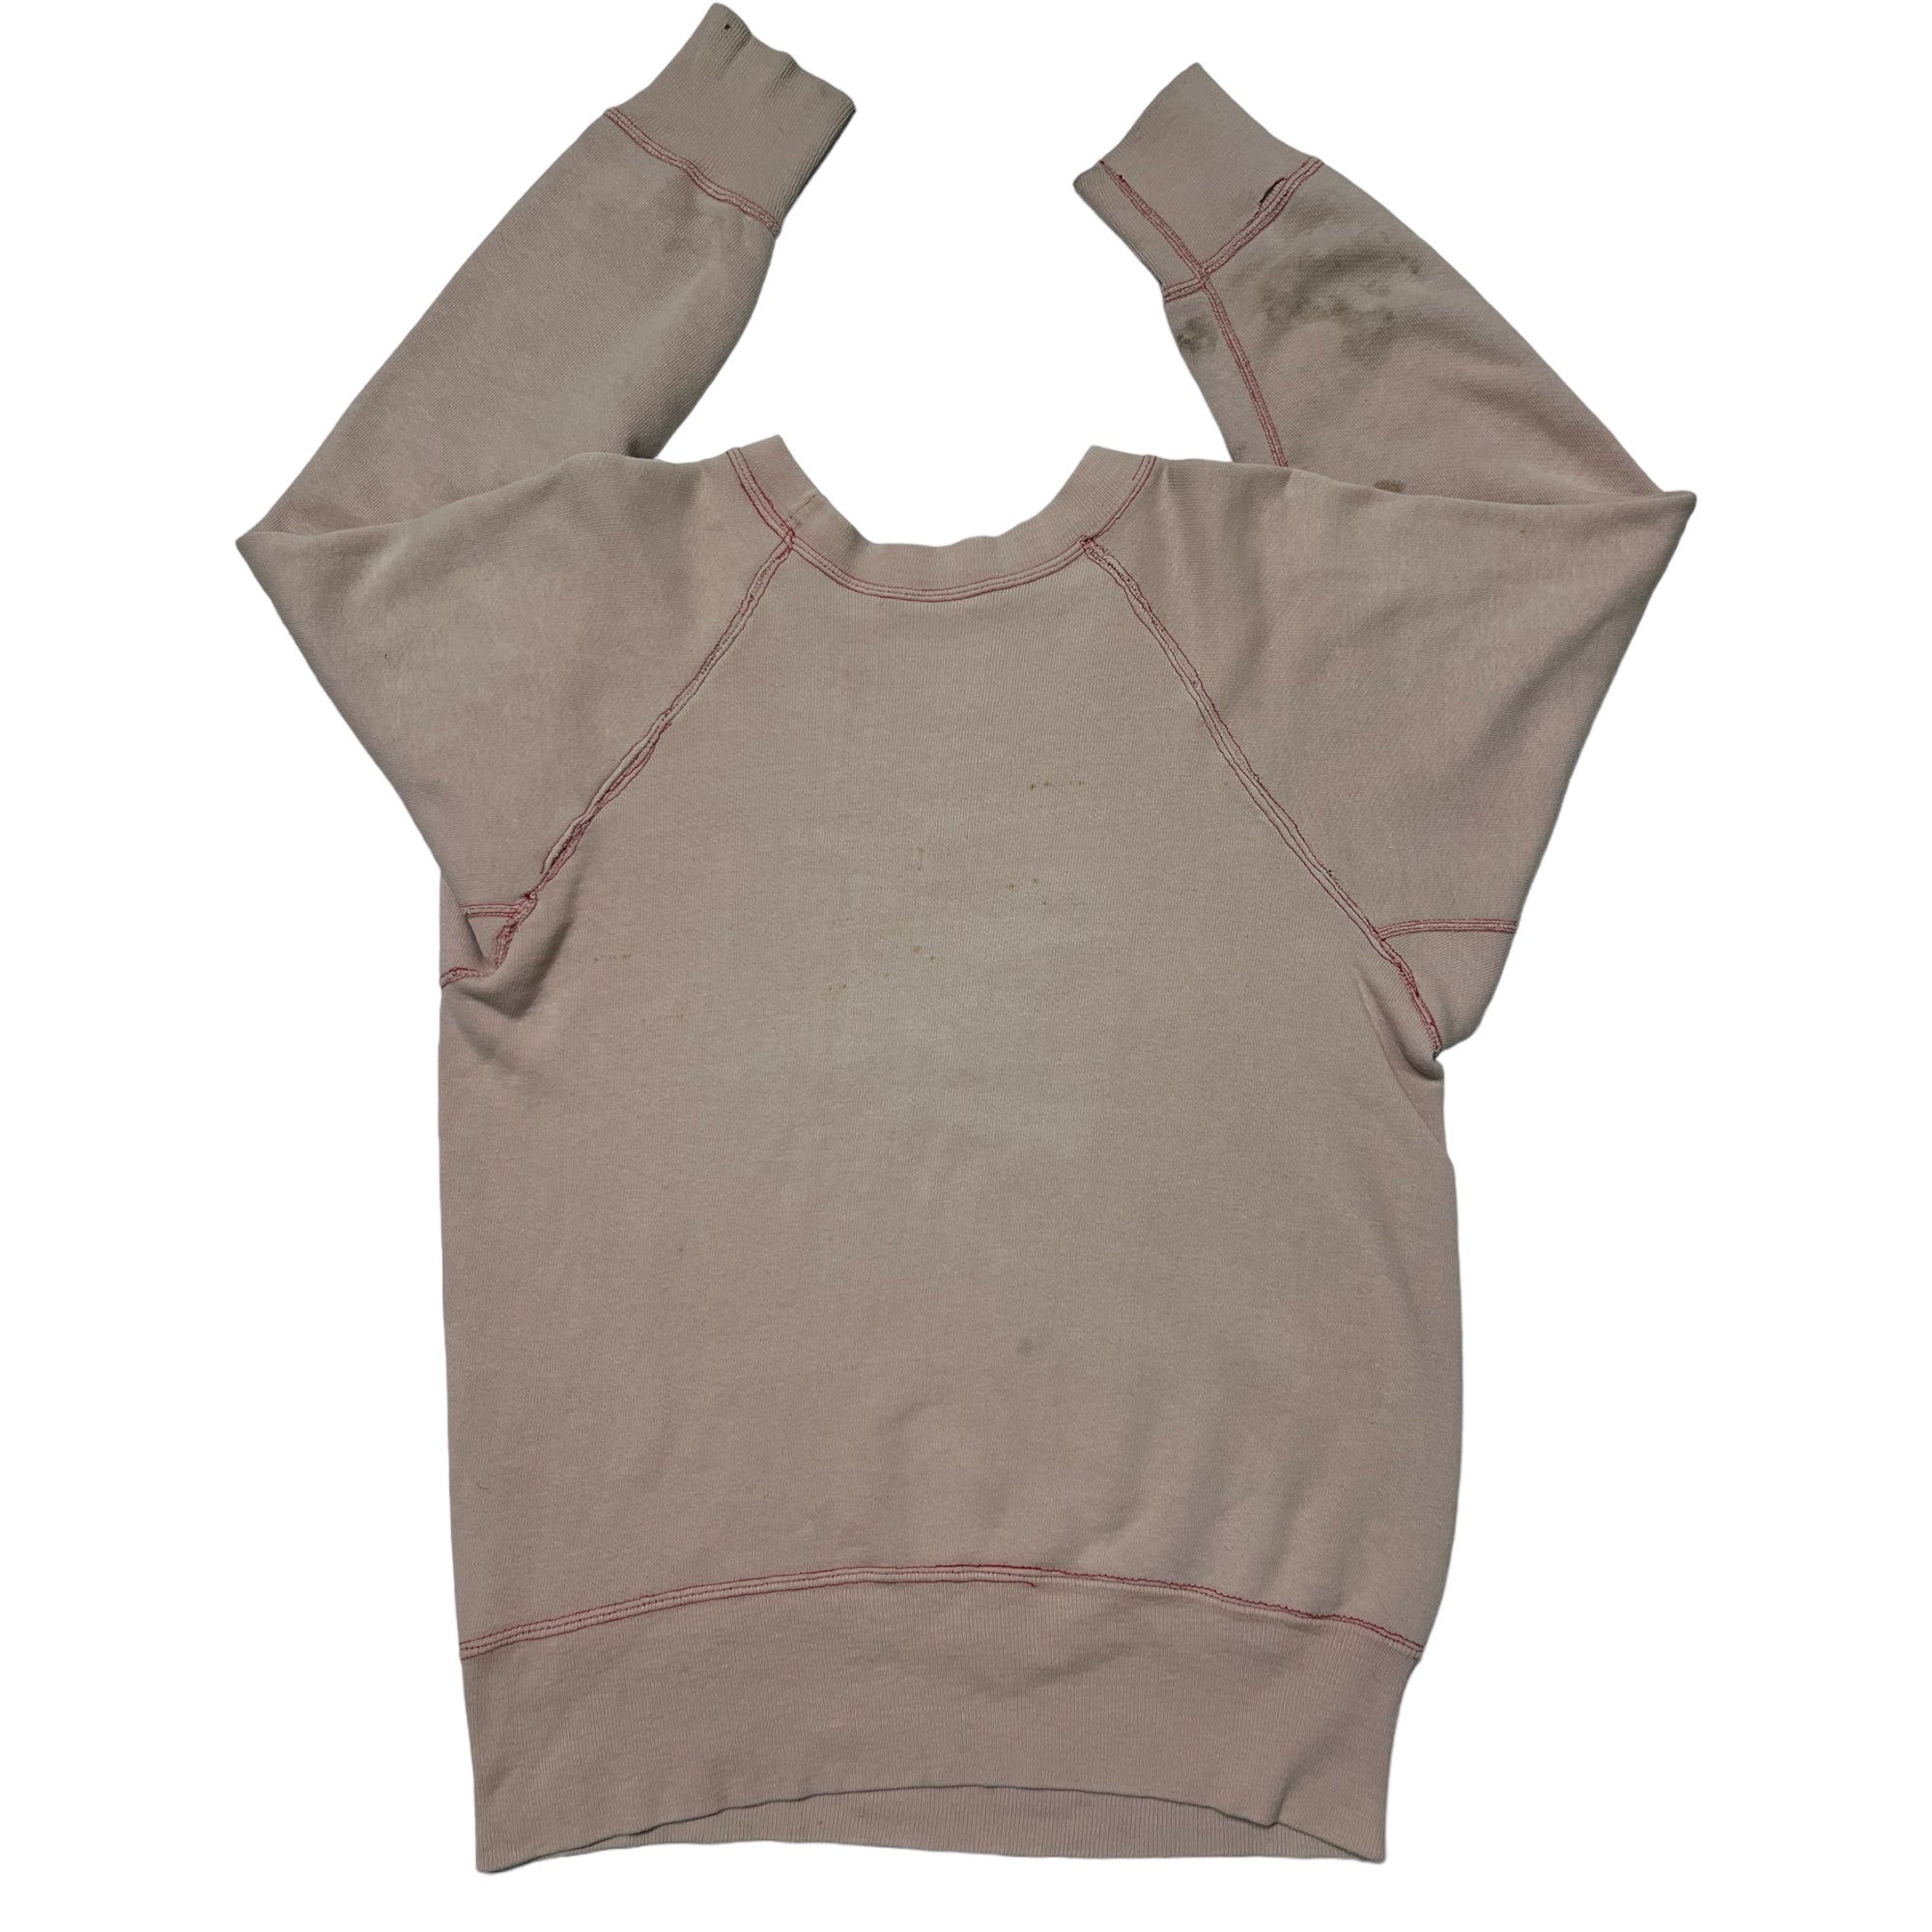 1960s Flock Print Stanford Collegiate Sweatshirt - Faded Pink - M/L